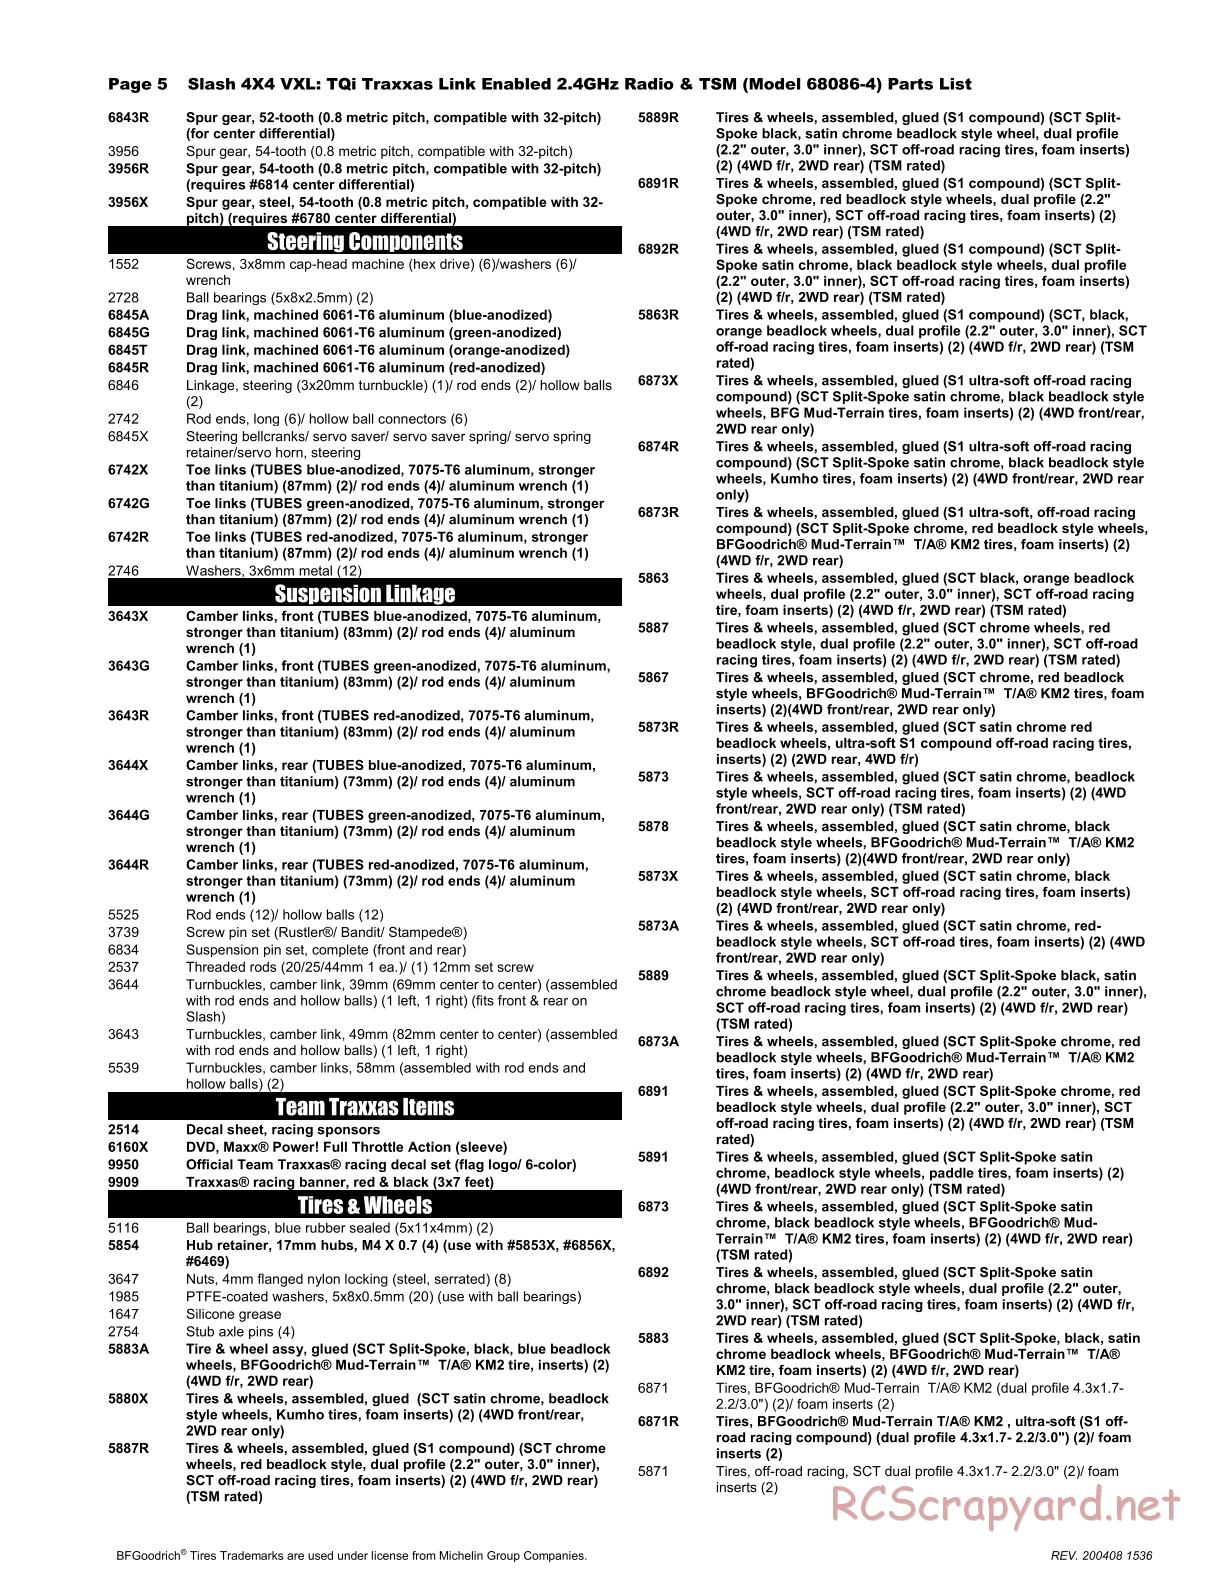 Traxxas - Slash 4x4 VXL - Parts List - Page 5